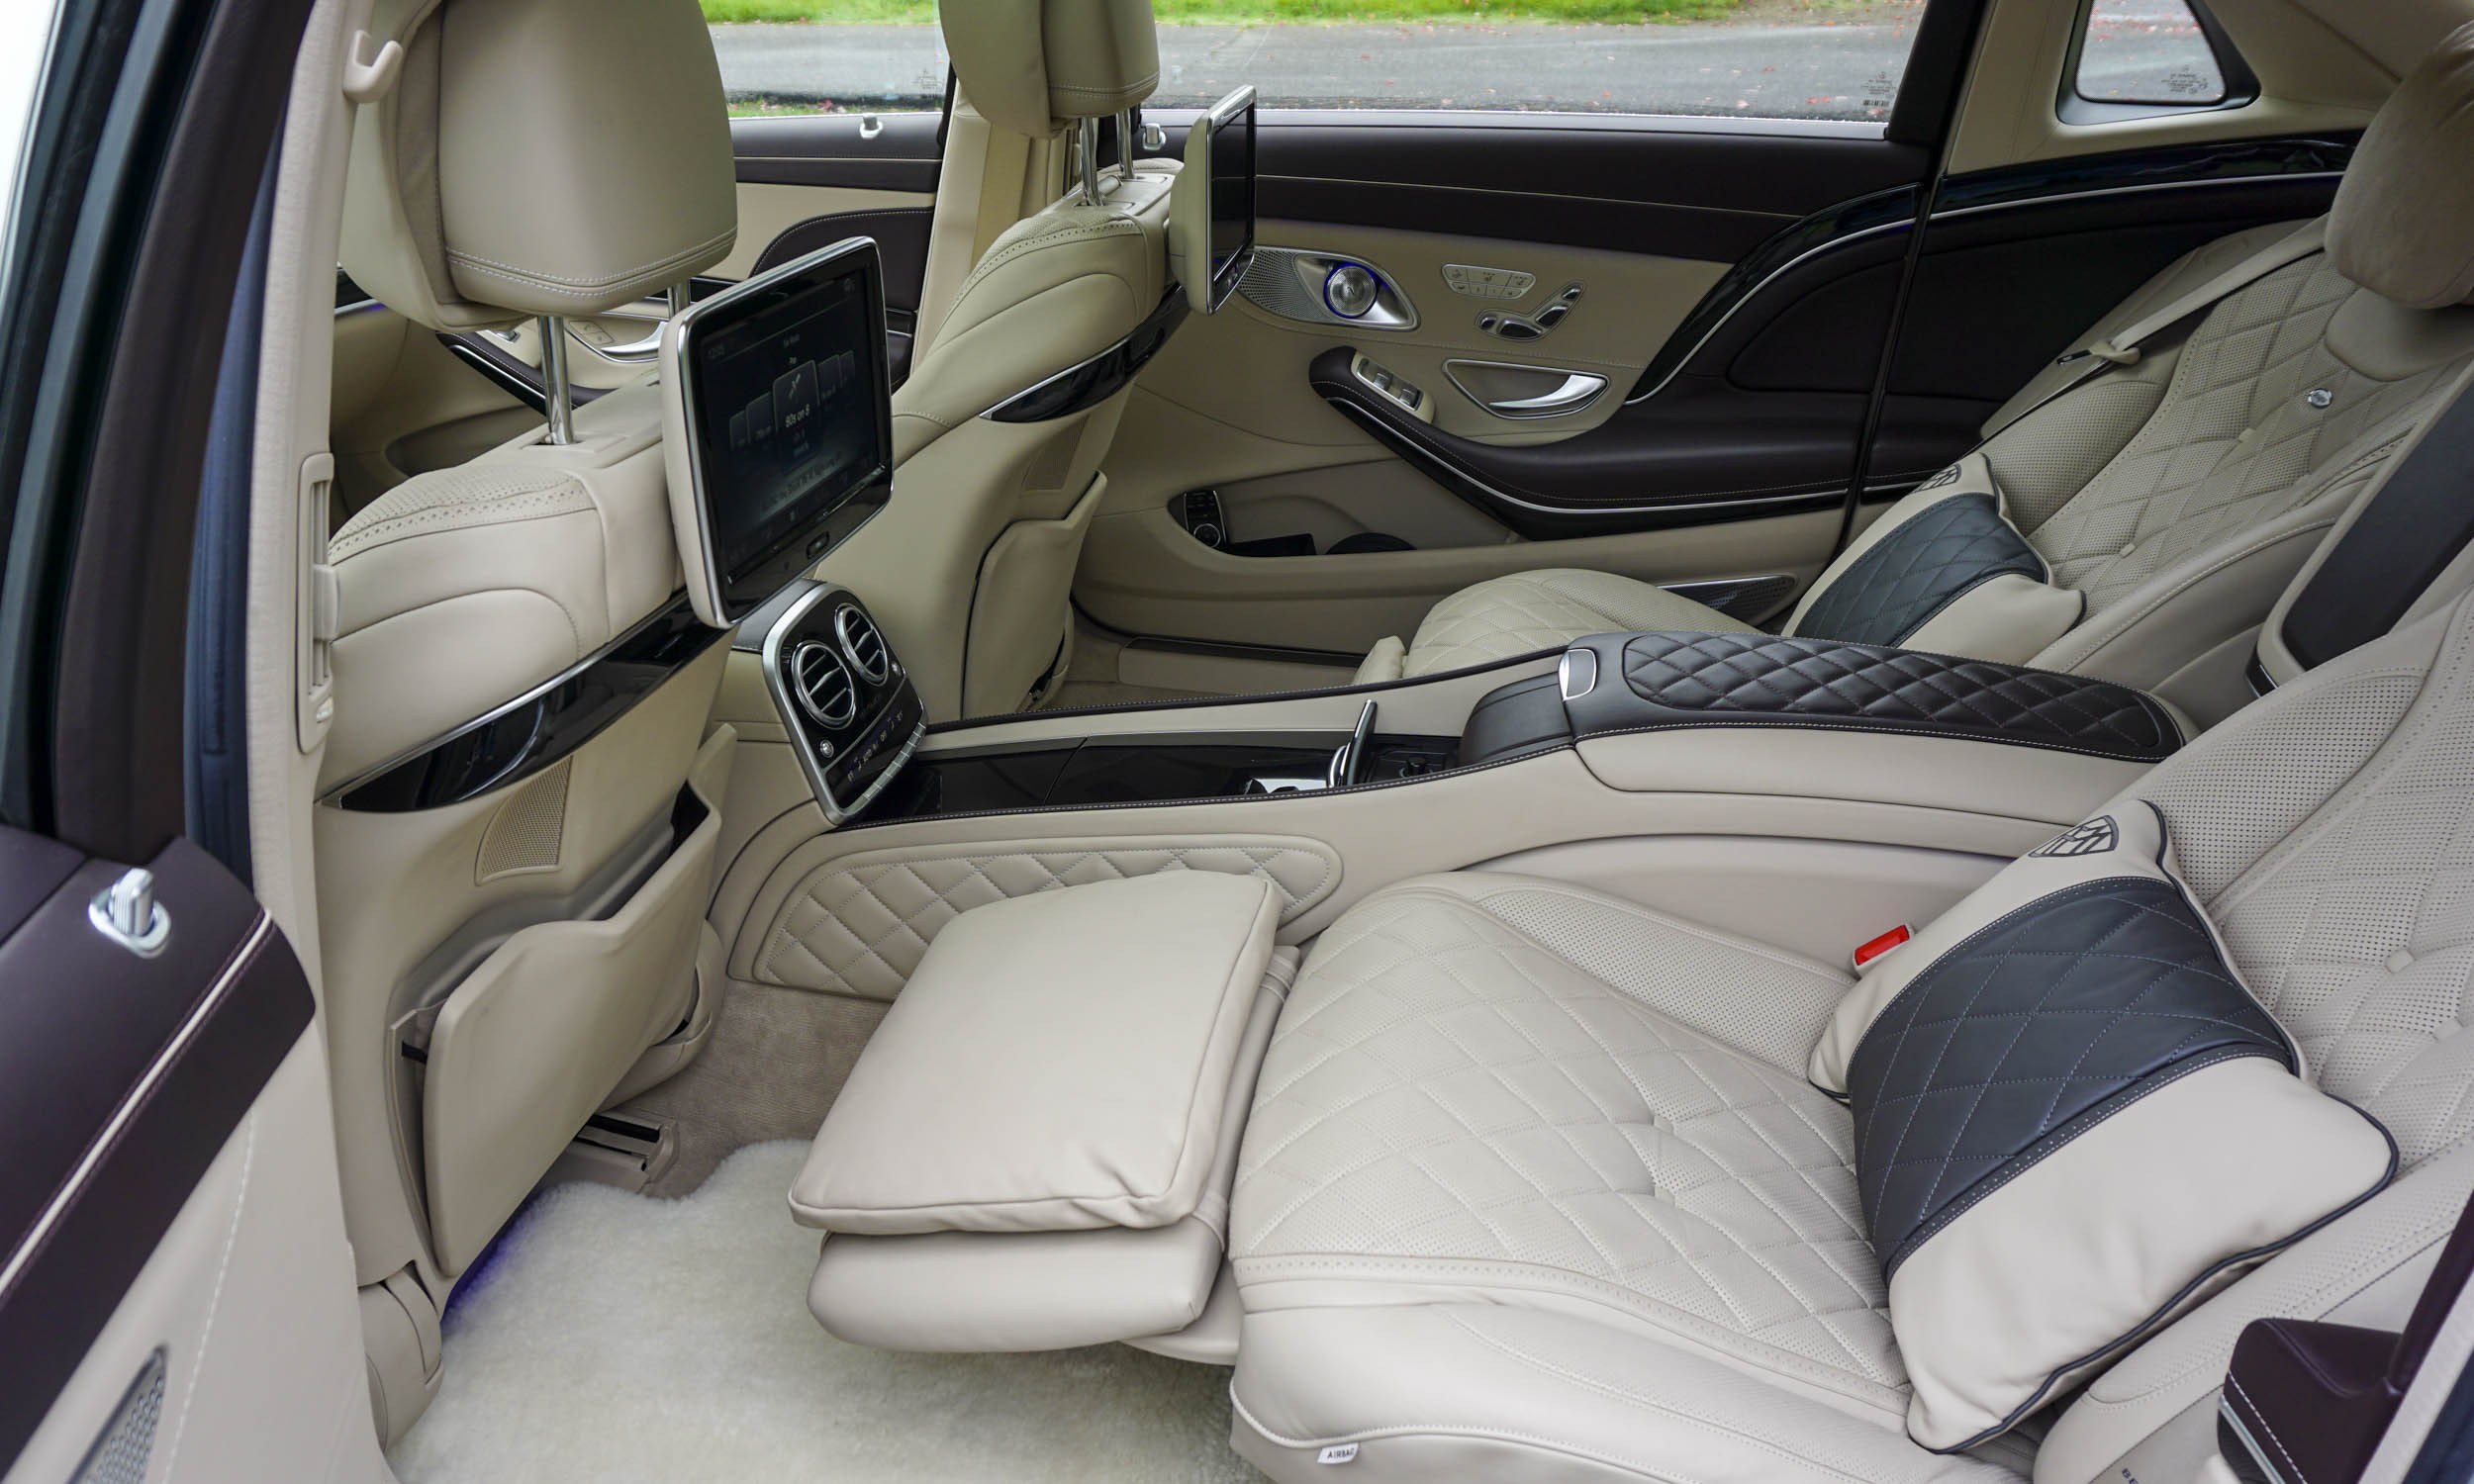 Mercedes-Maybach Backseat